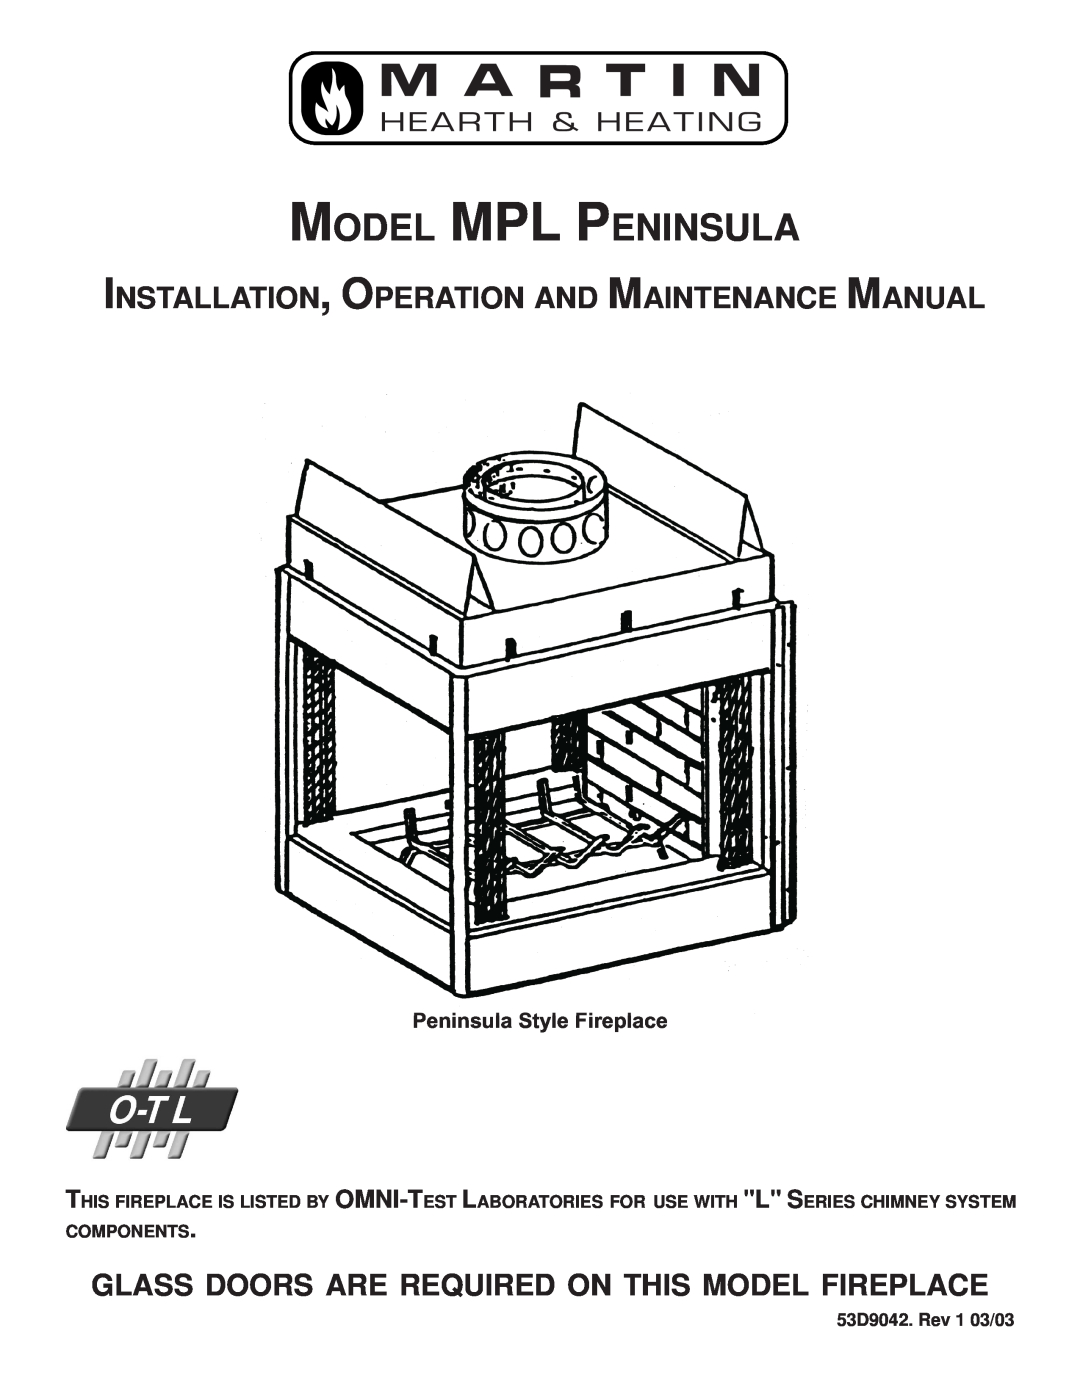 Martin Fireplaces manual Model Mpl Peninsula, Installation, Operation And Maintenance Manual, 53D9042. Rev 1 03/03 